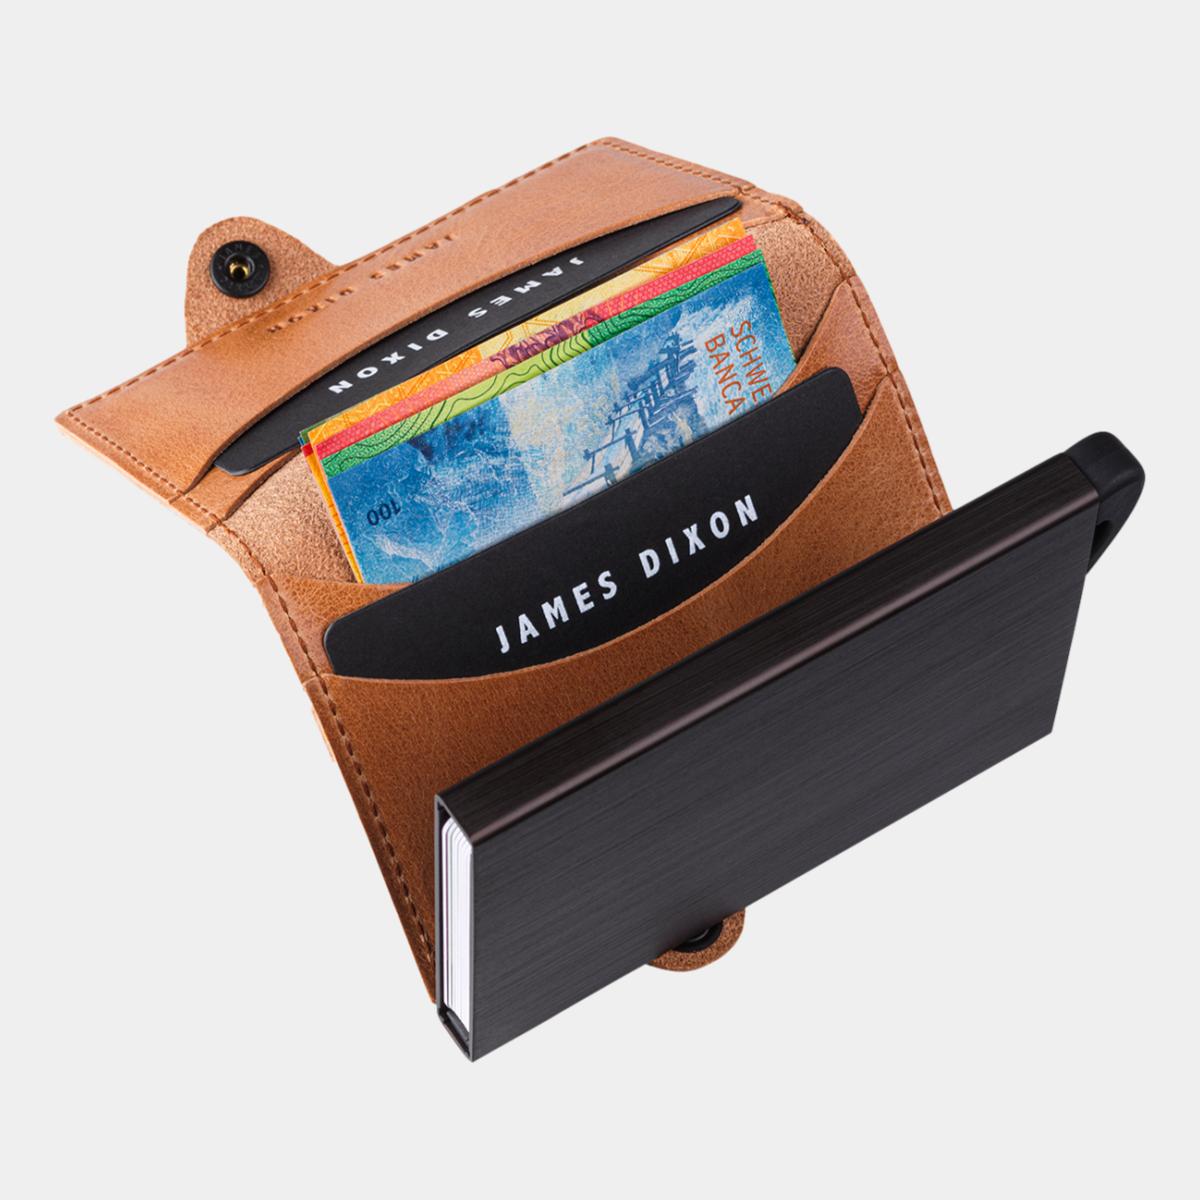 jd0127 james dixon boton classic camel brown wallet notes